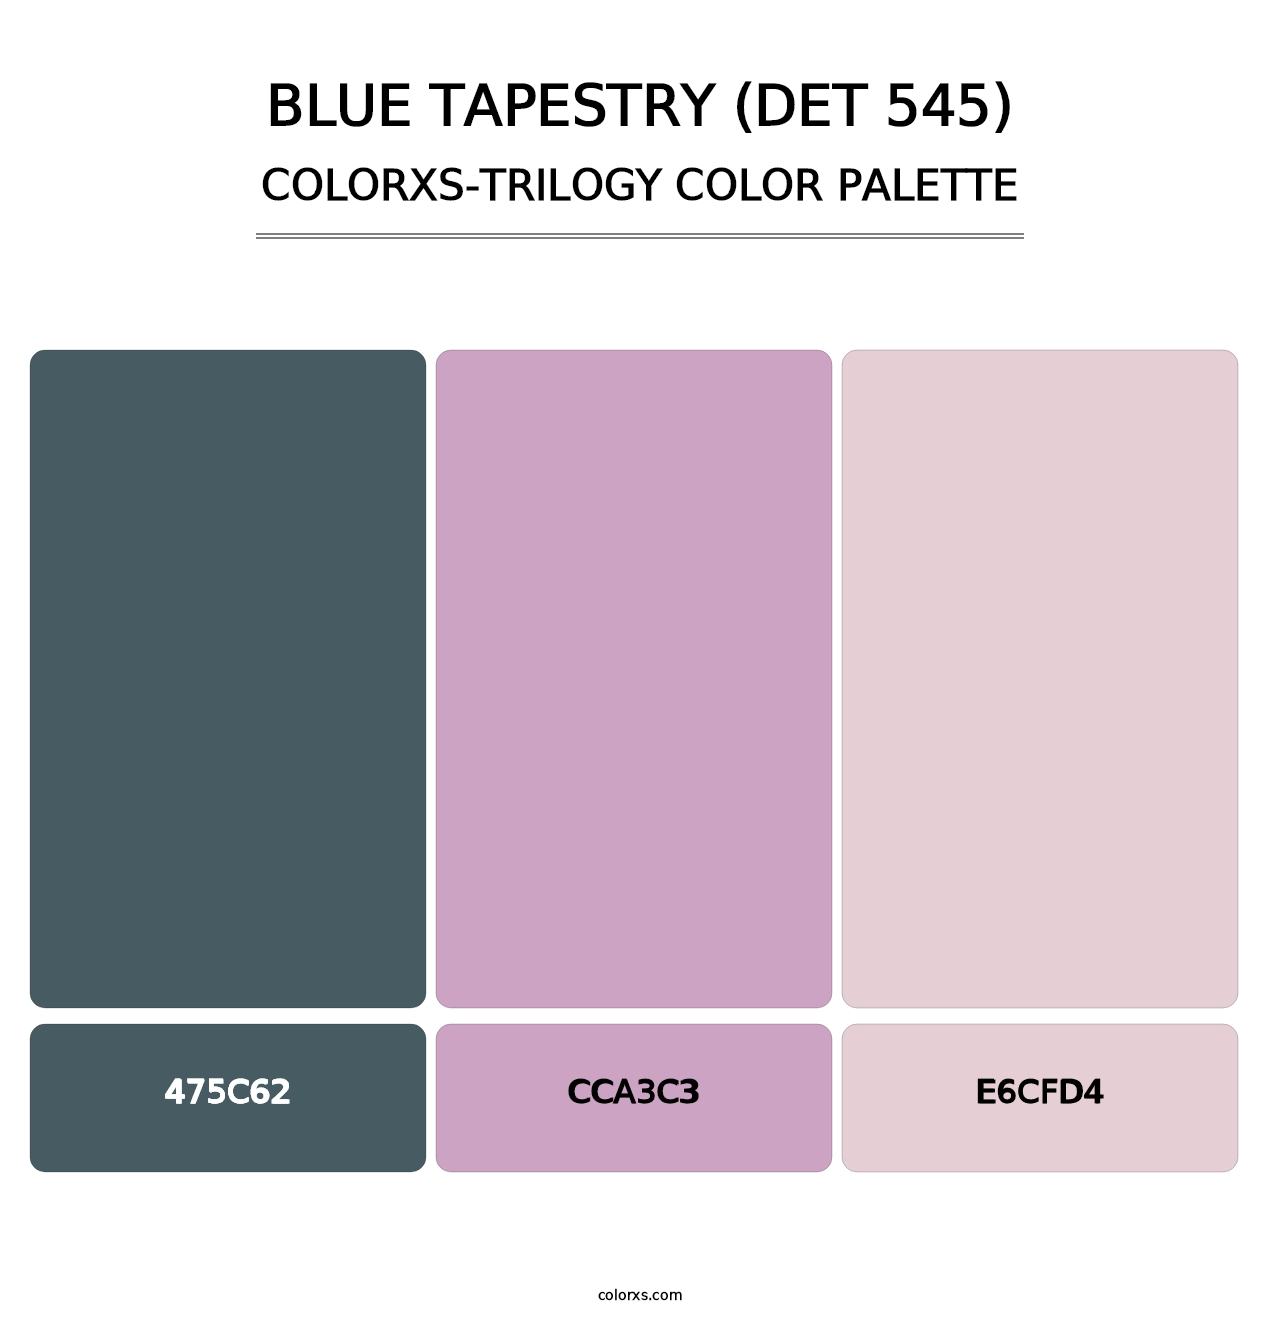 Blue Tapestry (DET 545) - Colorxs Trilogy Palette